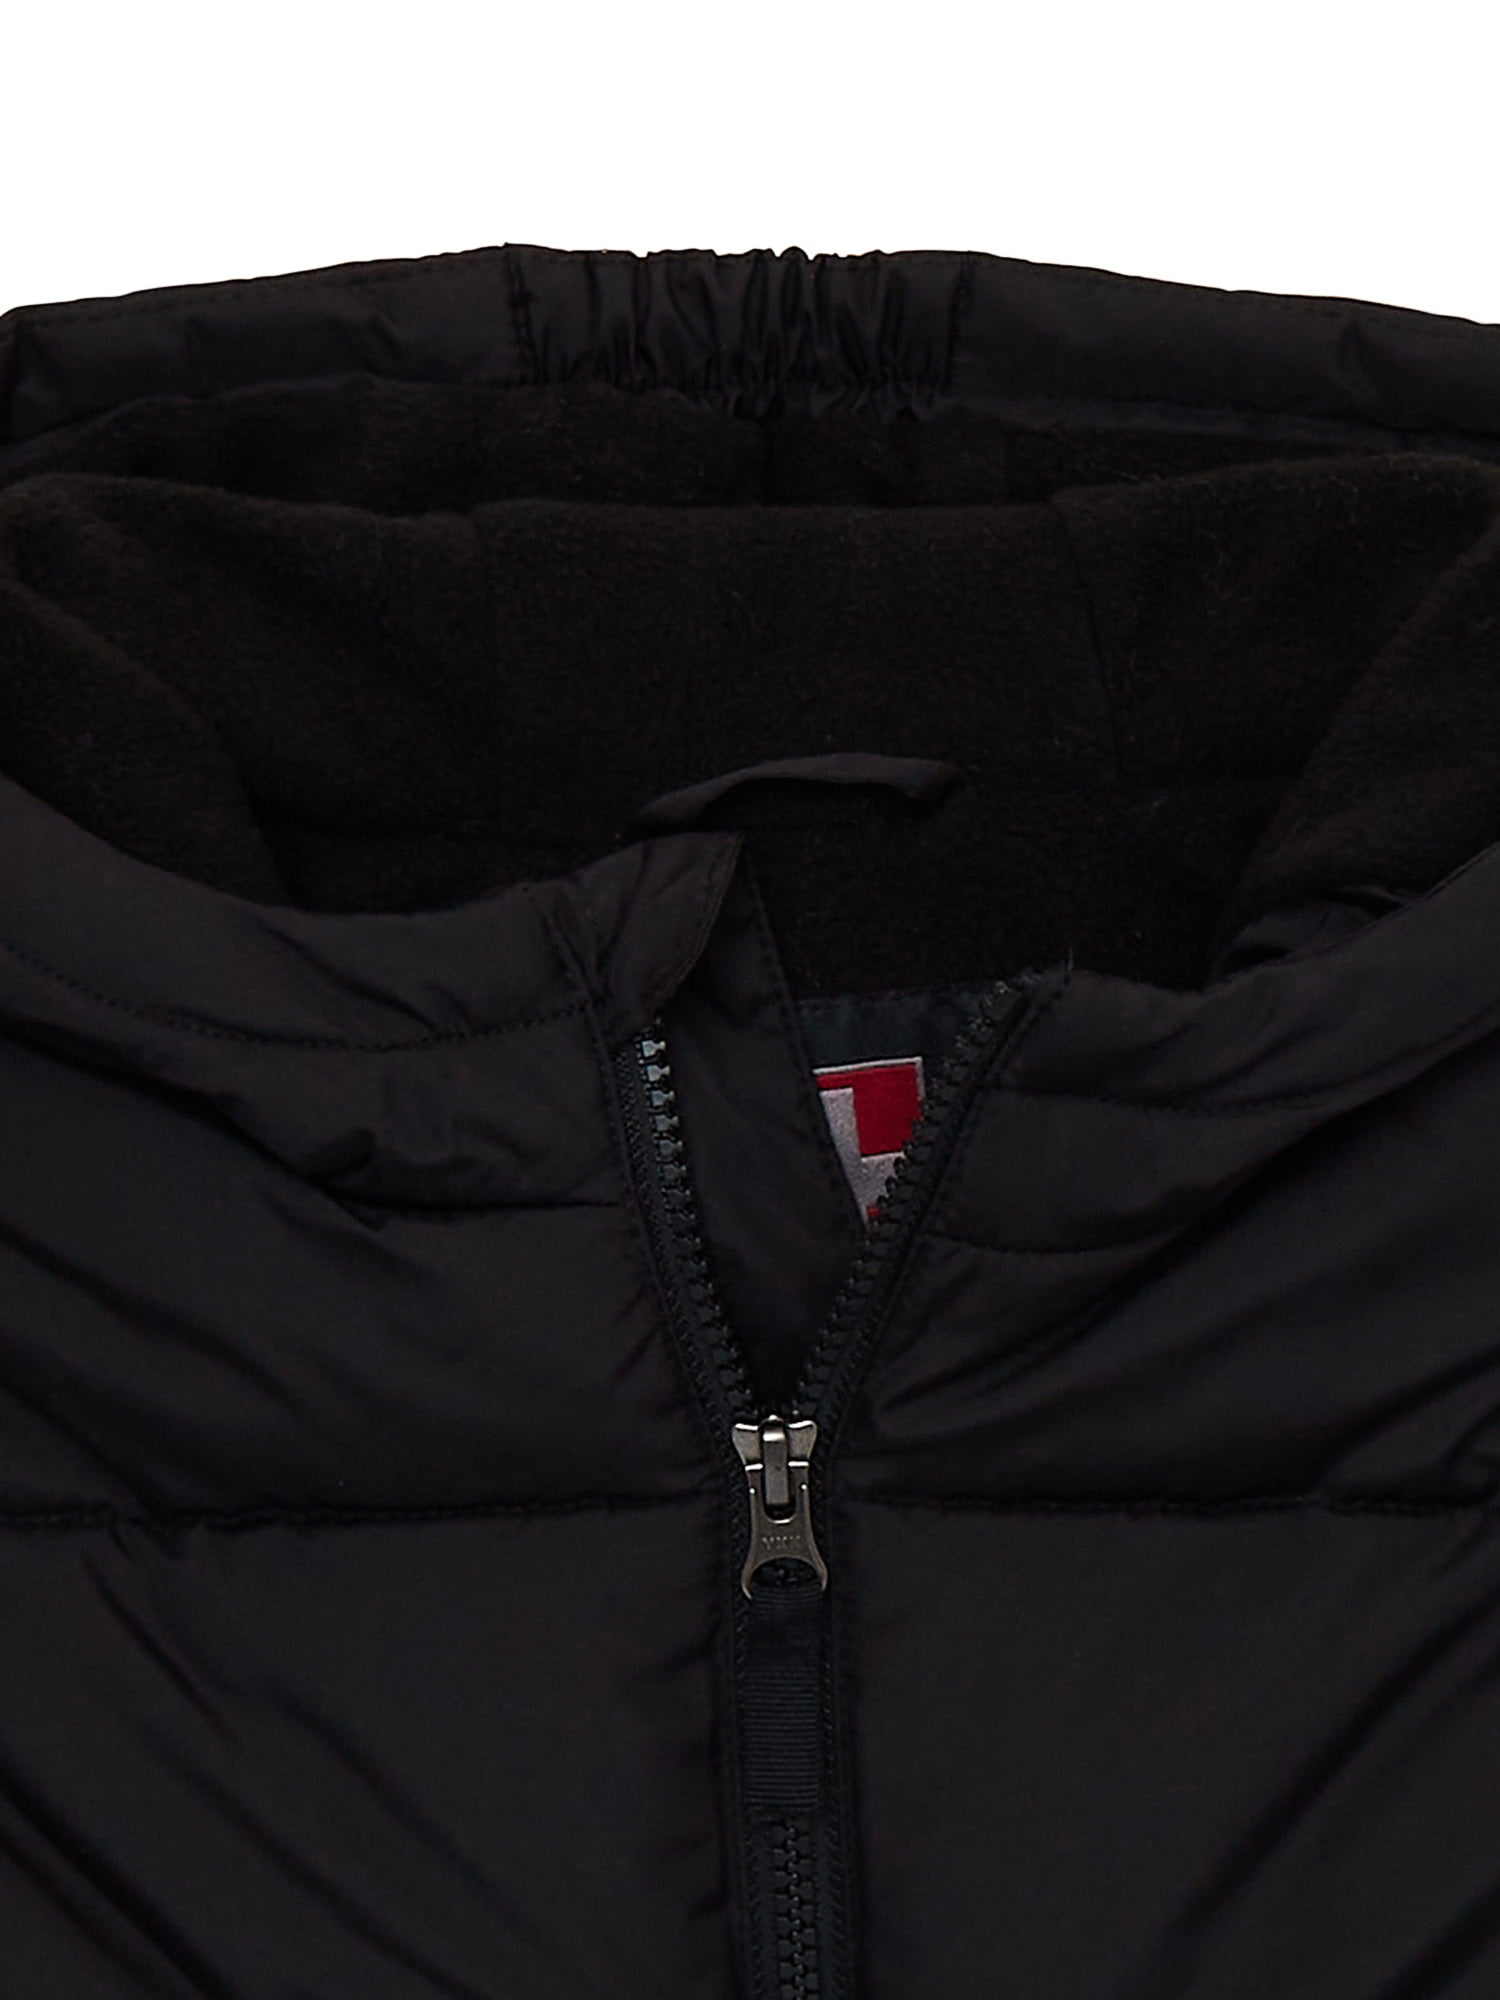 Buy Swiss Tech Boys Winter Puffer Jacket with Hood, Sizes 4-18 & Husky ...